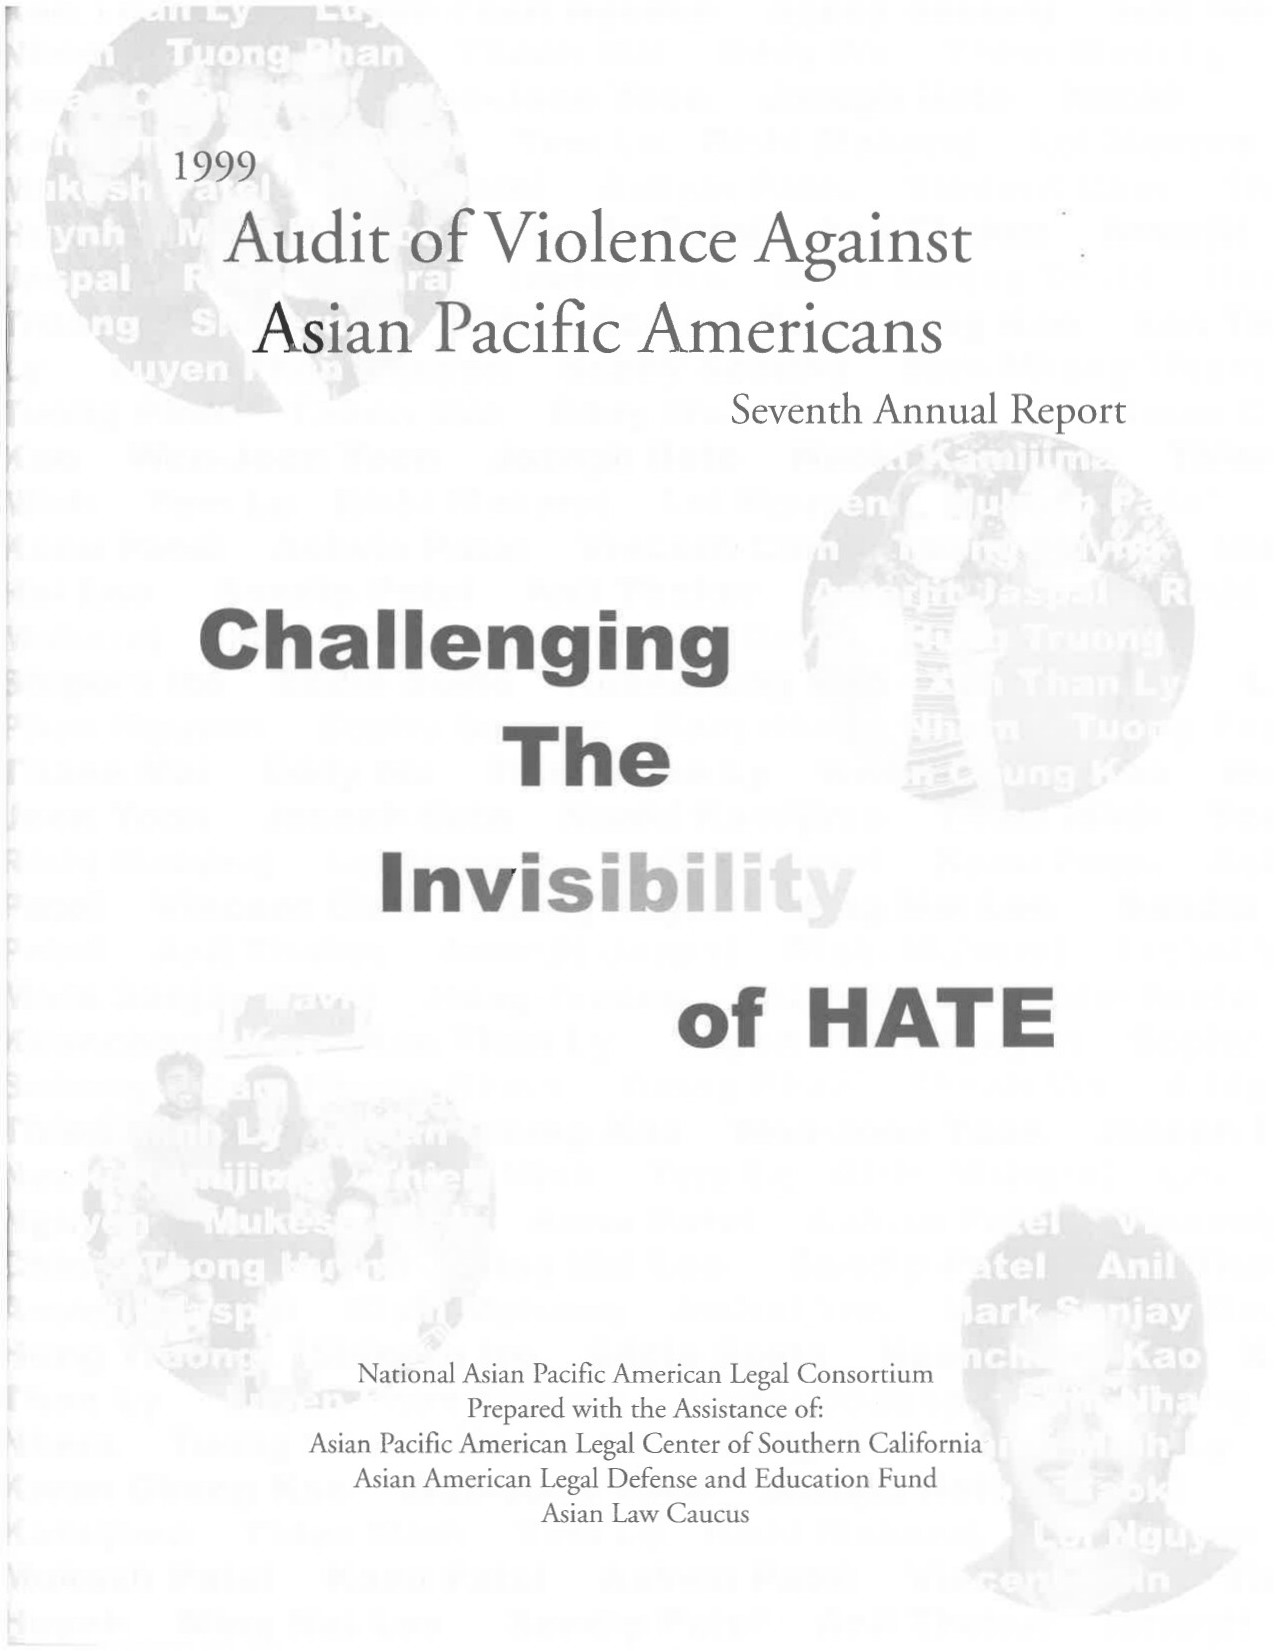 1999 report